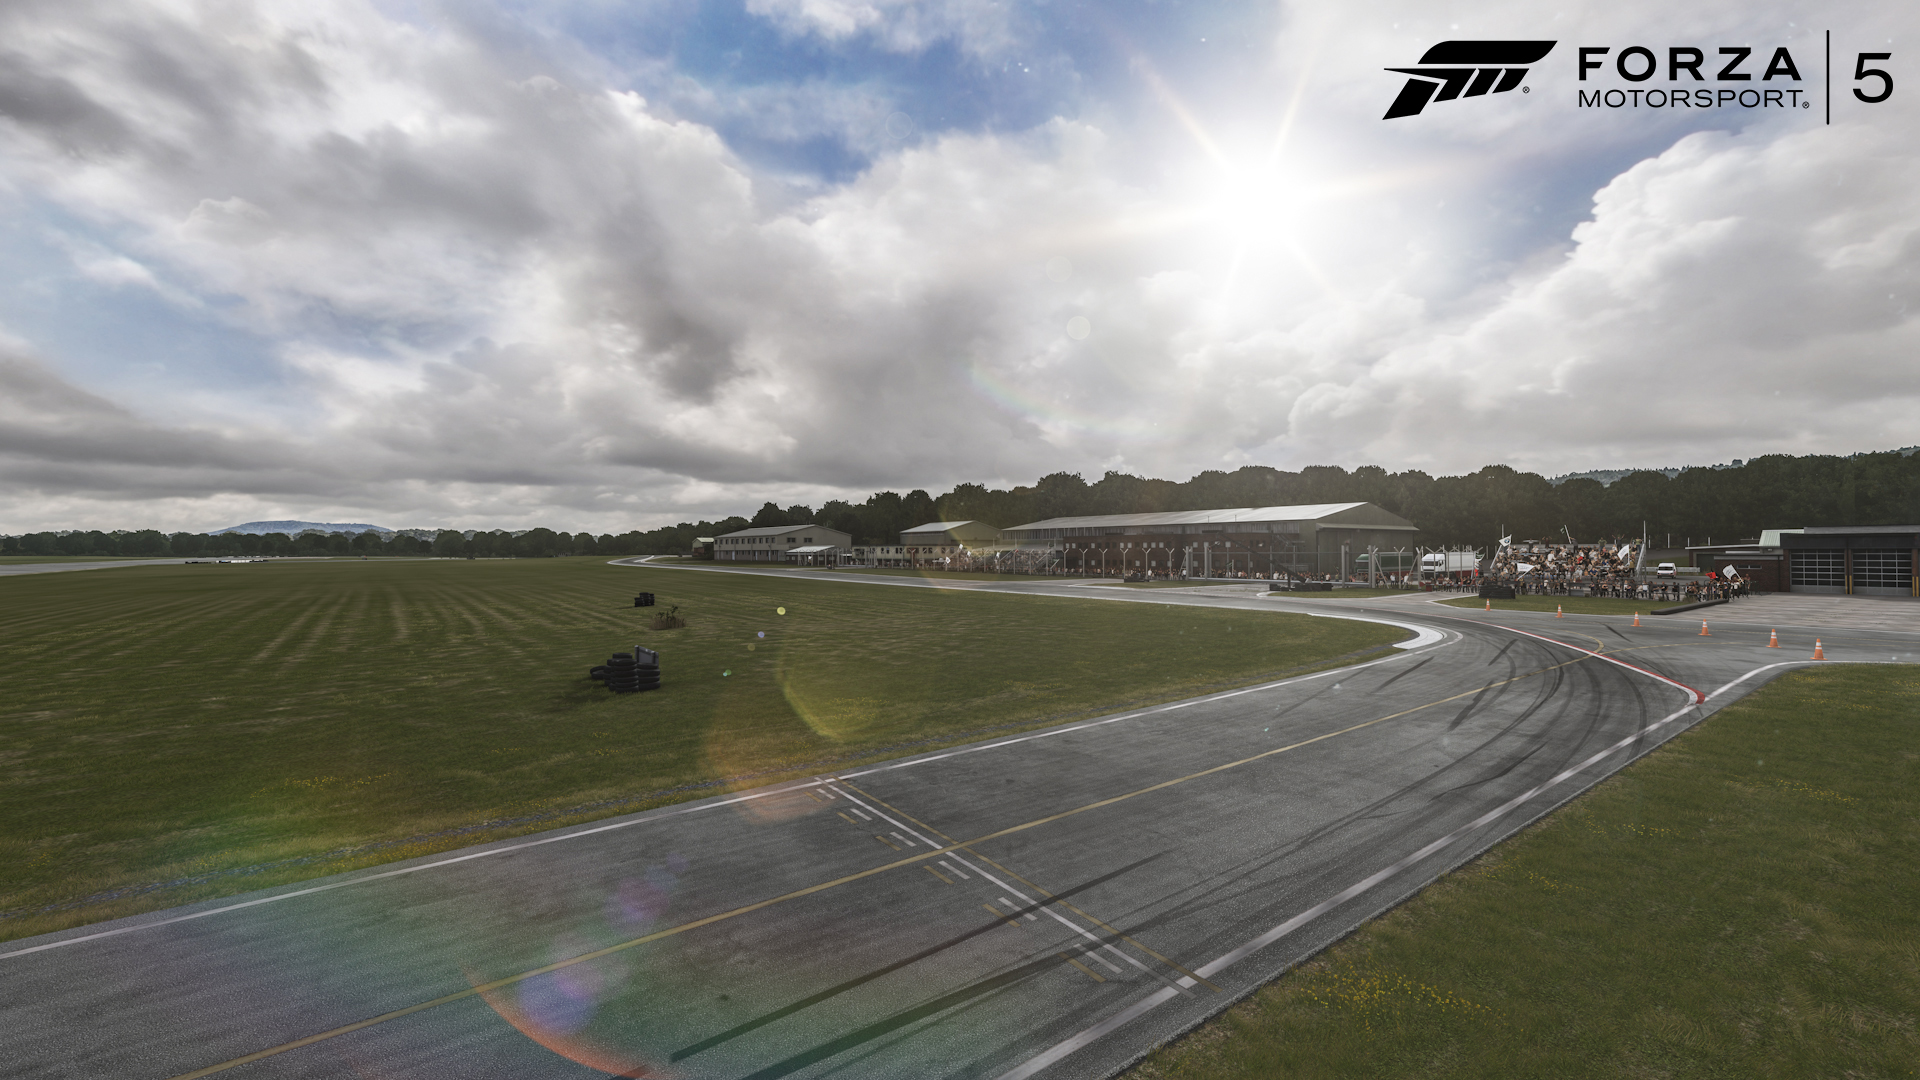 Top Gear Test Track shown off in latest Forza Motorsport 5 screenshots